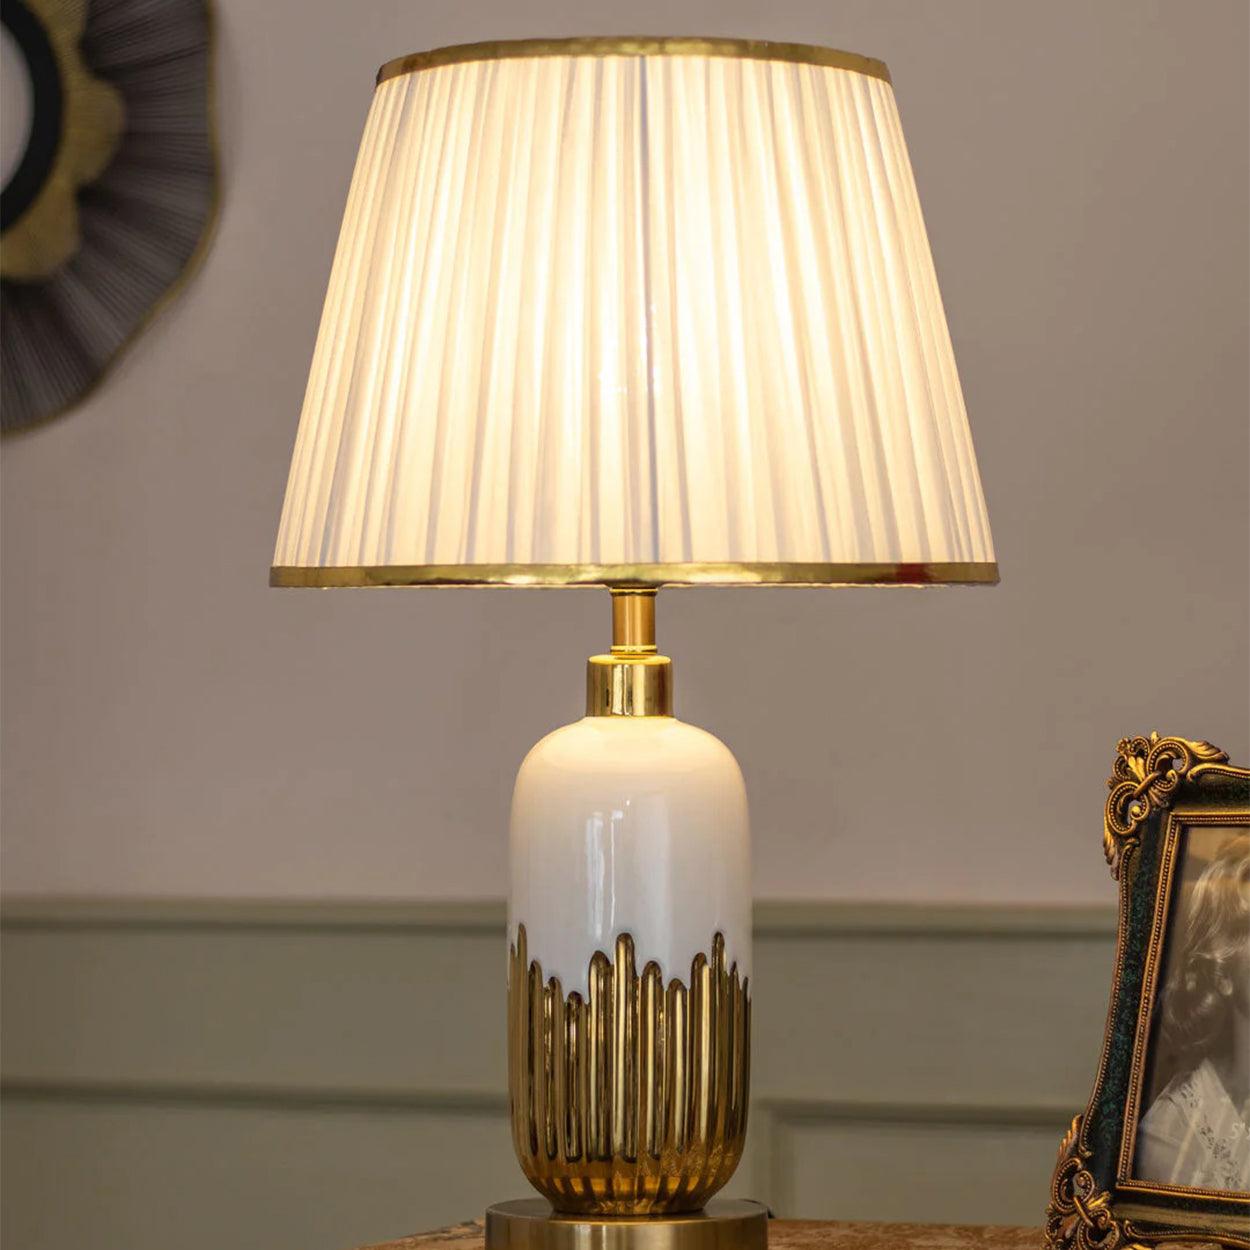 CAPSULE GOLD AND WHITE CERAMIC TABLE LAMP BEDSIDE LAMP - Ankur Lighting